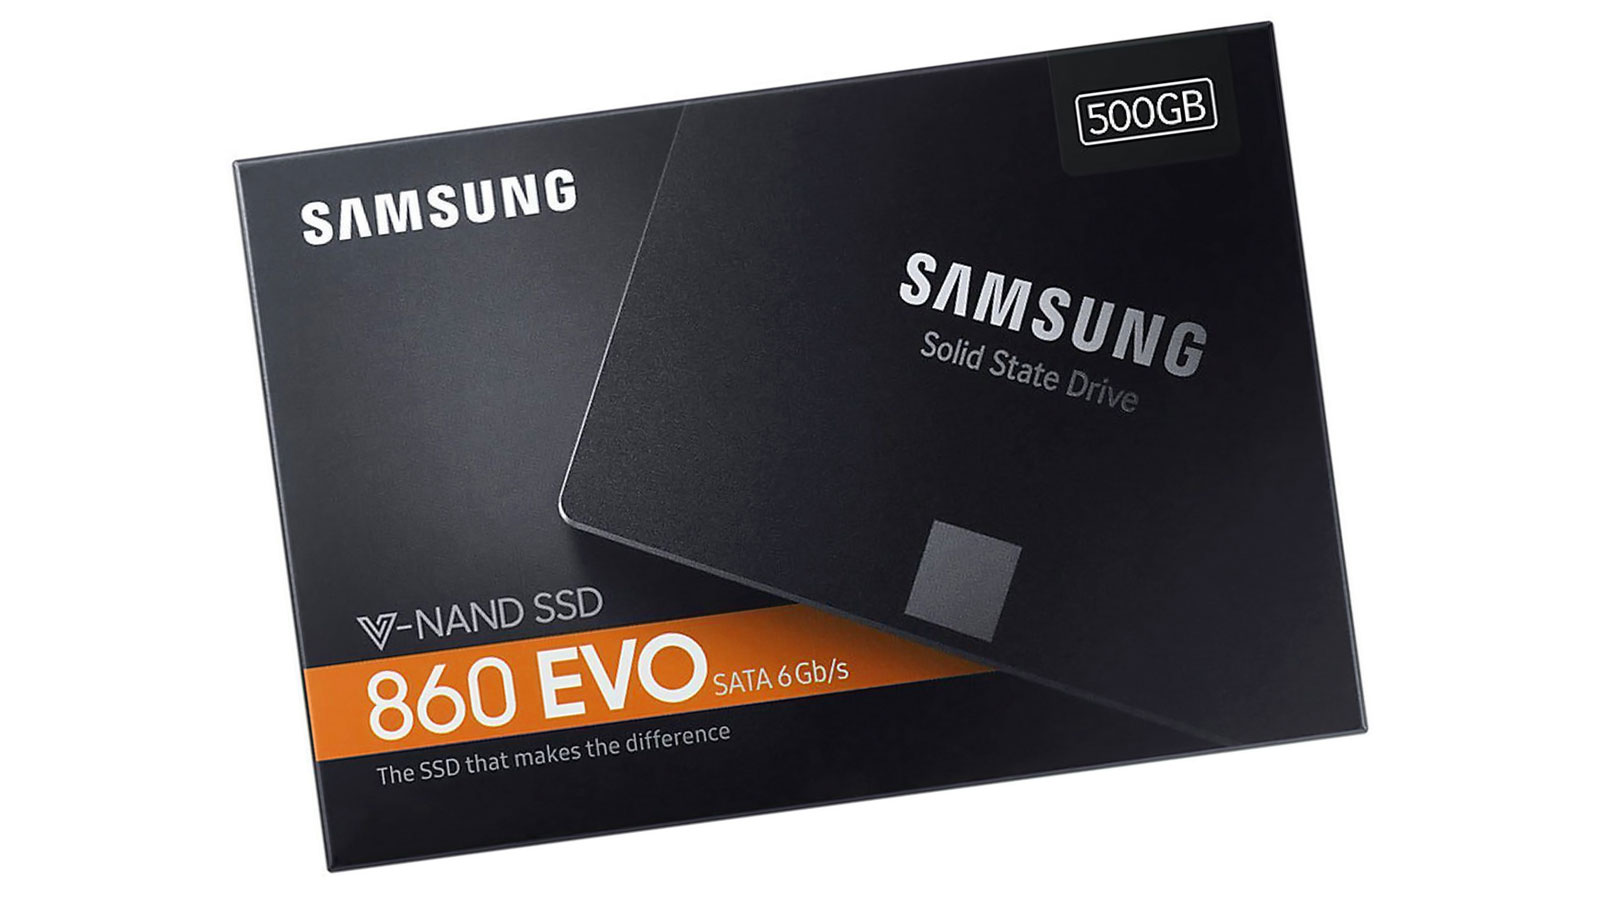 Ssd Samsung 500gb 860 Uvo